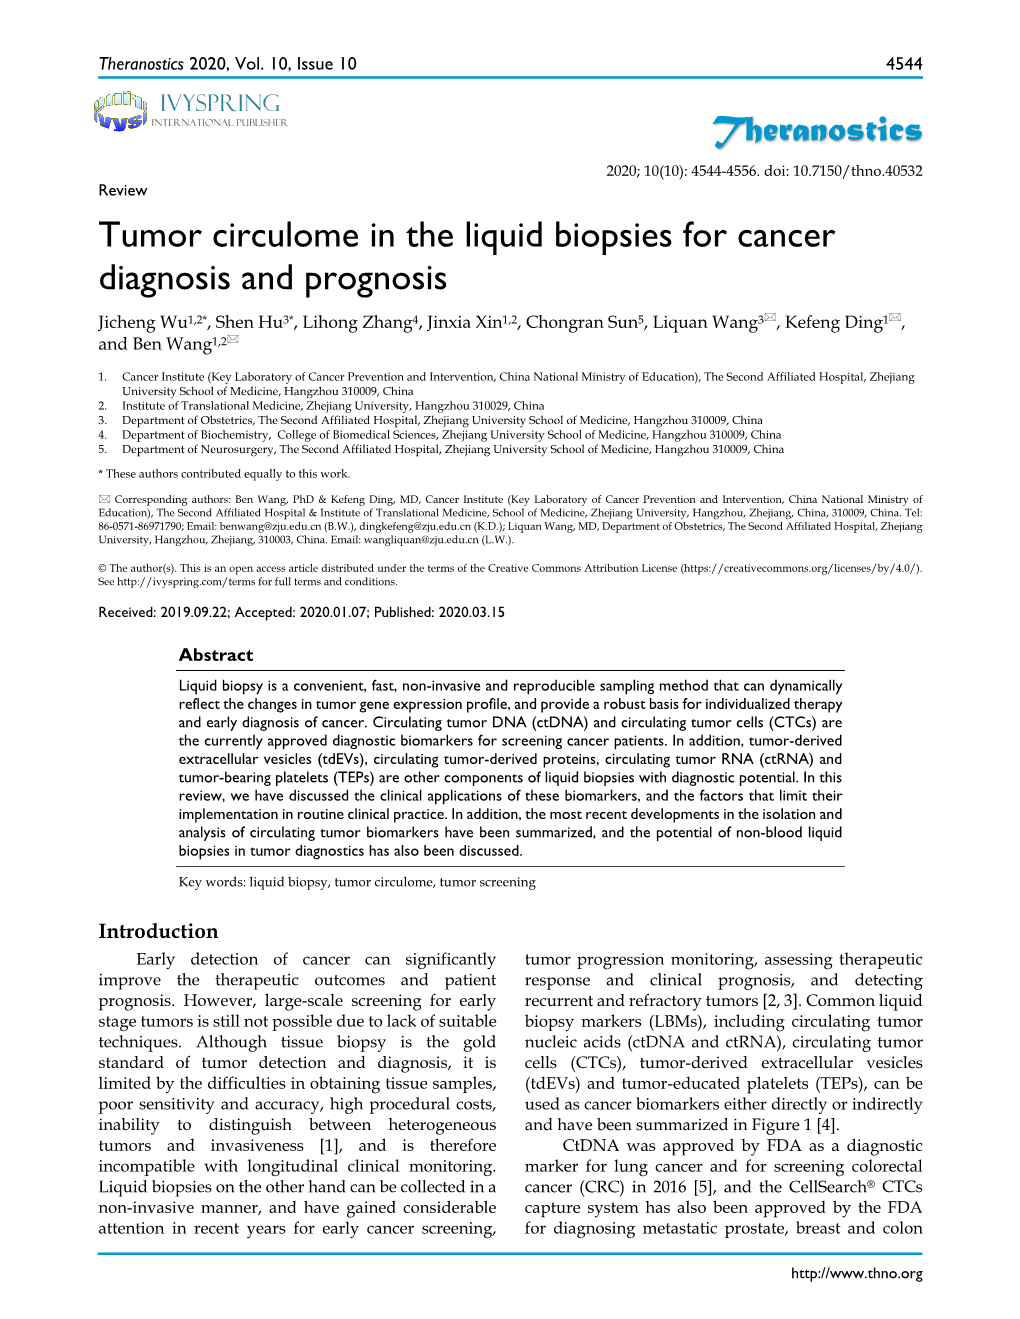 Theranostics Tumor Circulome in the Liquid Biopsies for Cancer